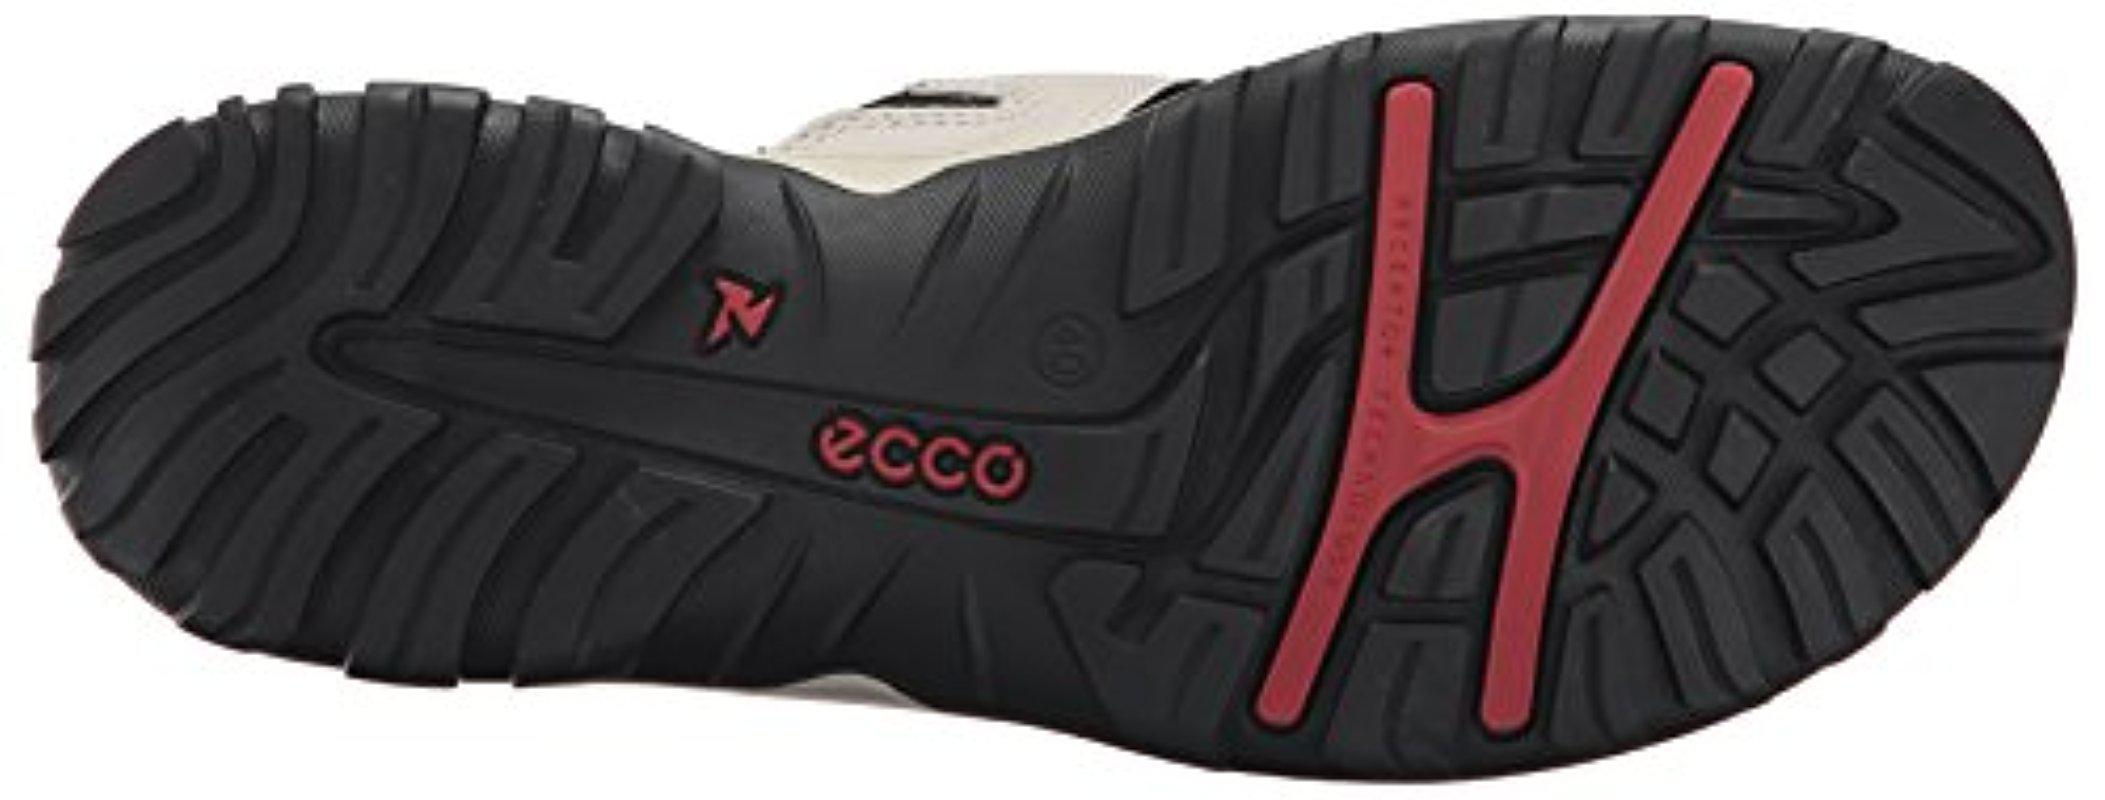 Ecco Leather Offroad Lite Slide Sandal in Black - Lyst